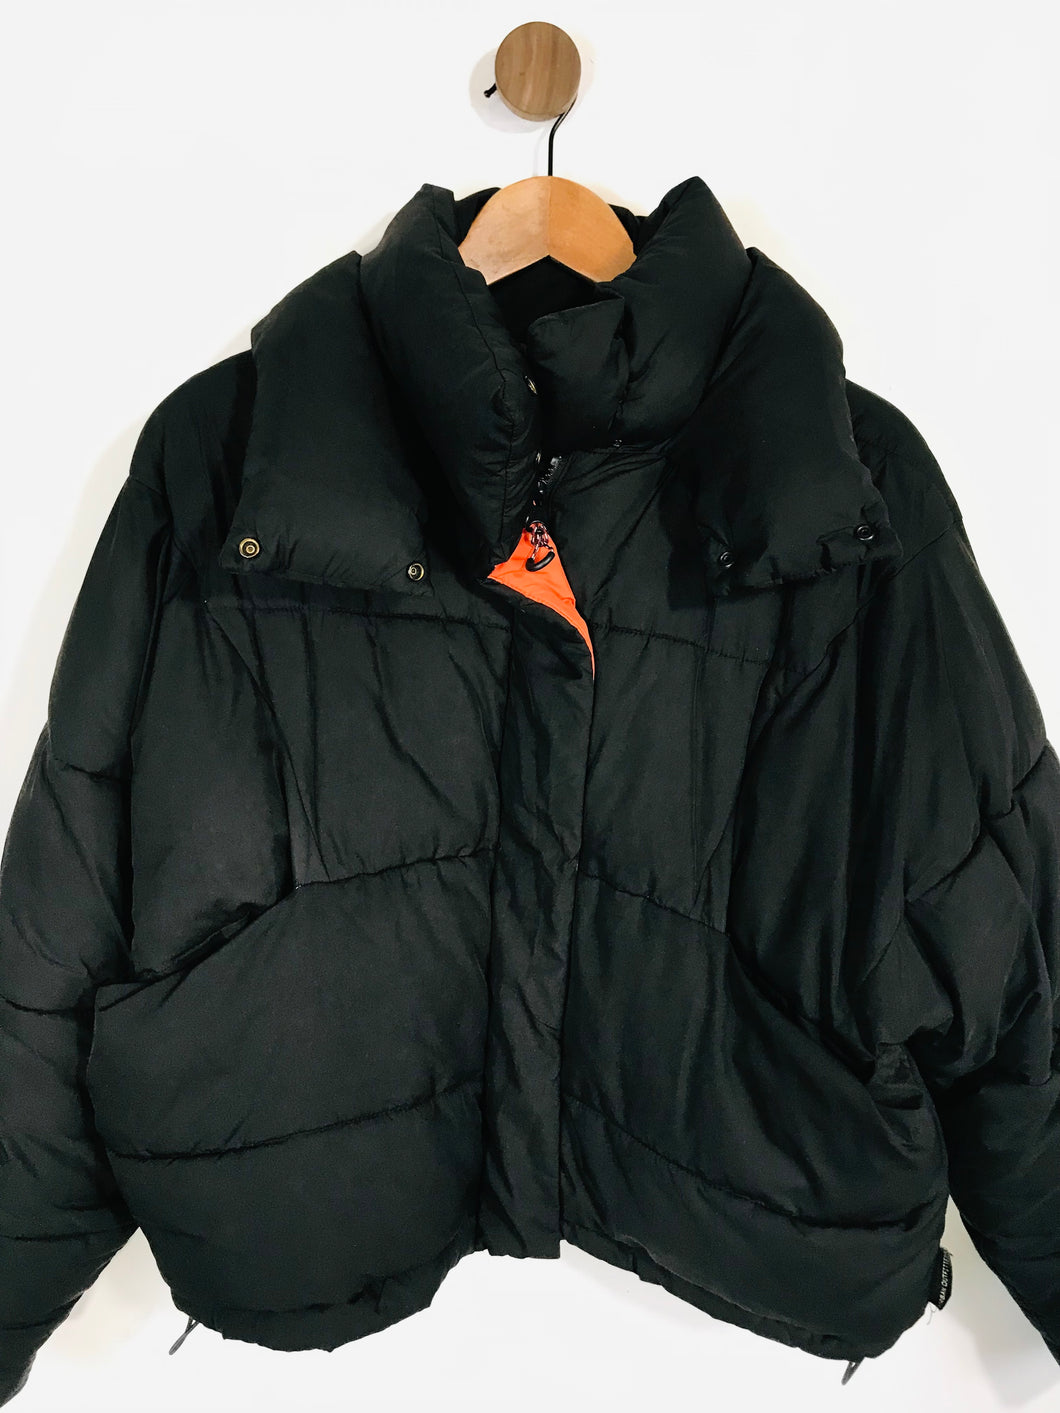 Urban Outfitters Women's Crop High Neck Puffer Jacket | XS UK6-8 | Black